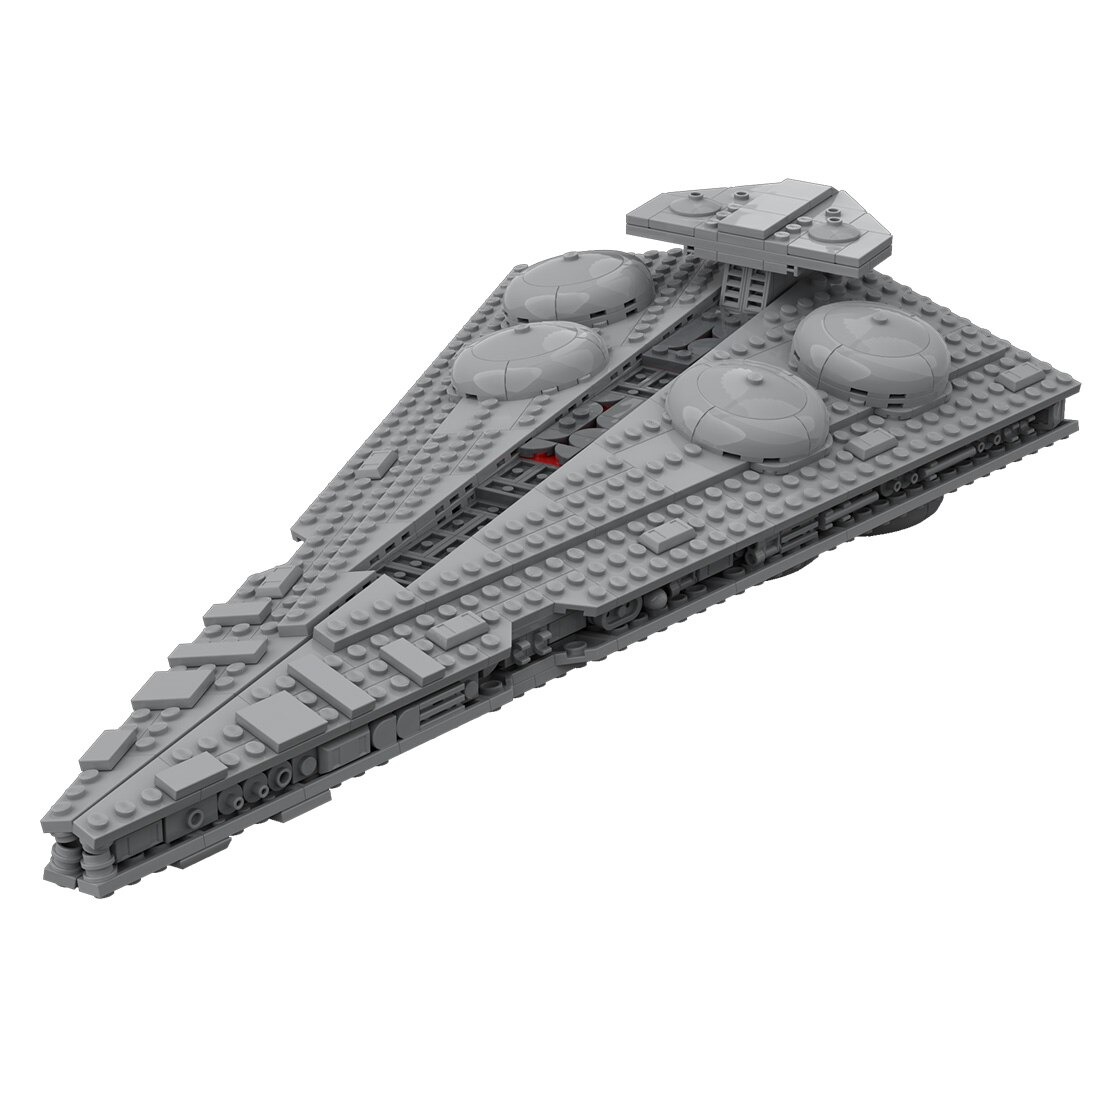 Interdictor-class Star Destroyer MOC-108178 Star Wars With 922PCS